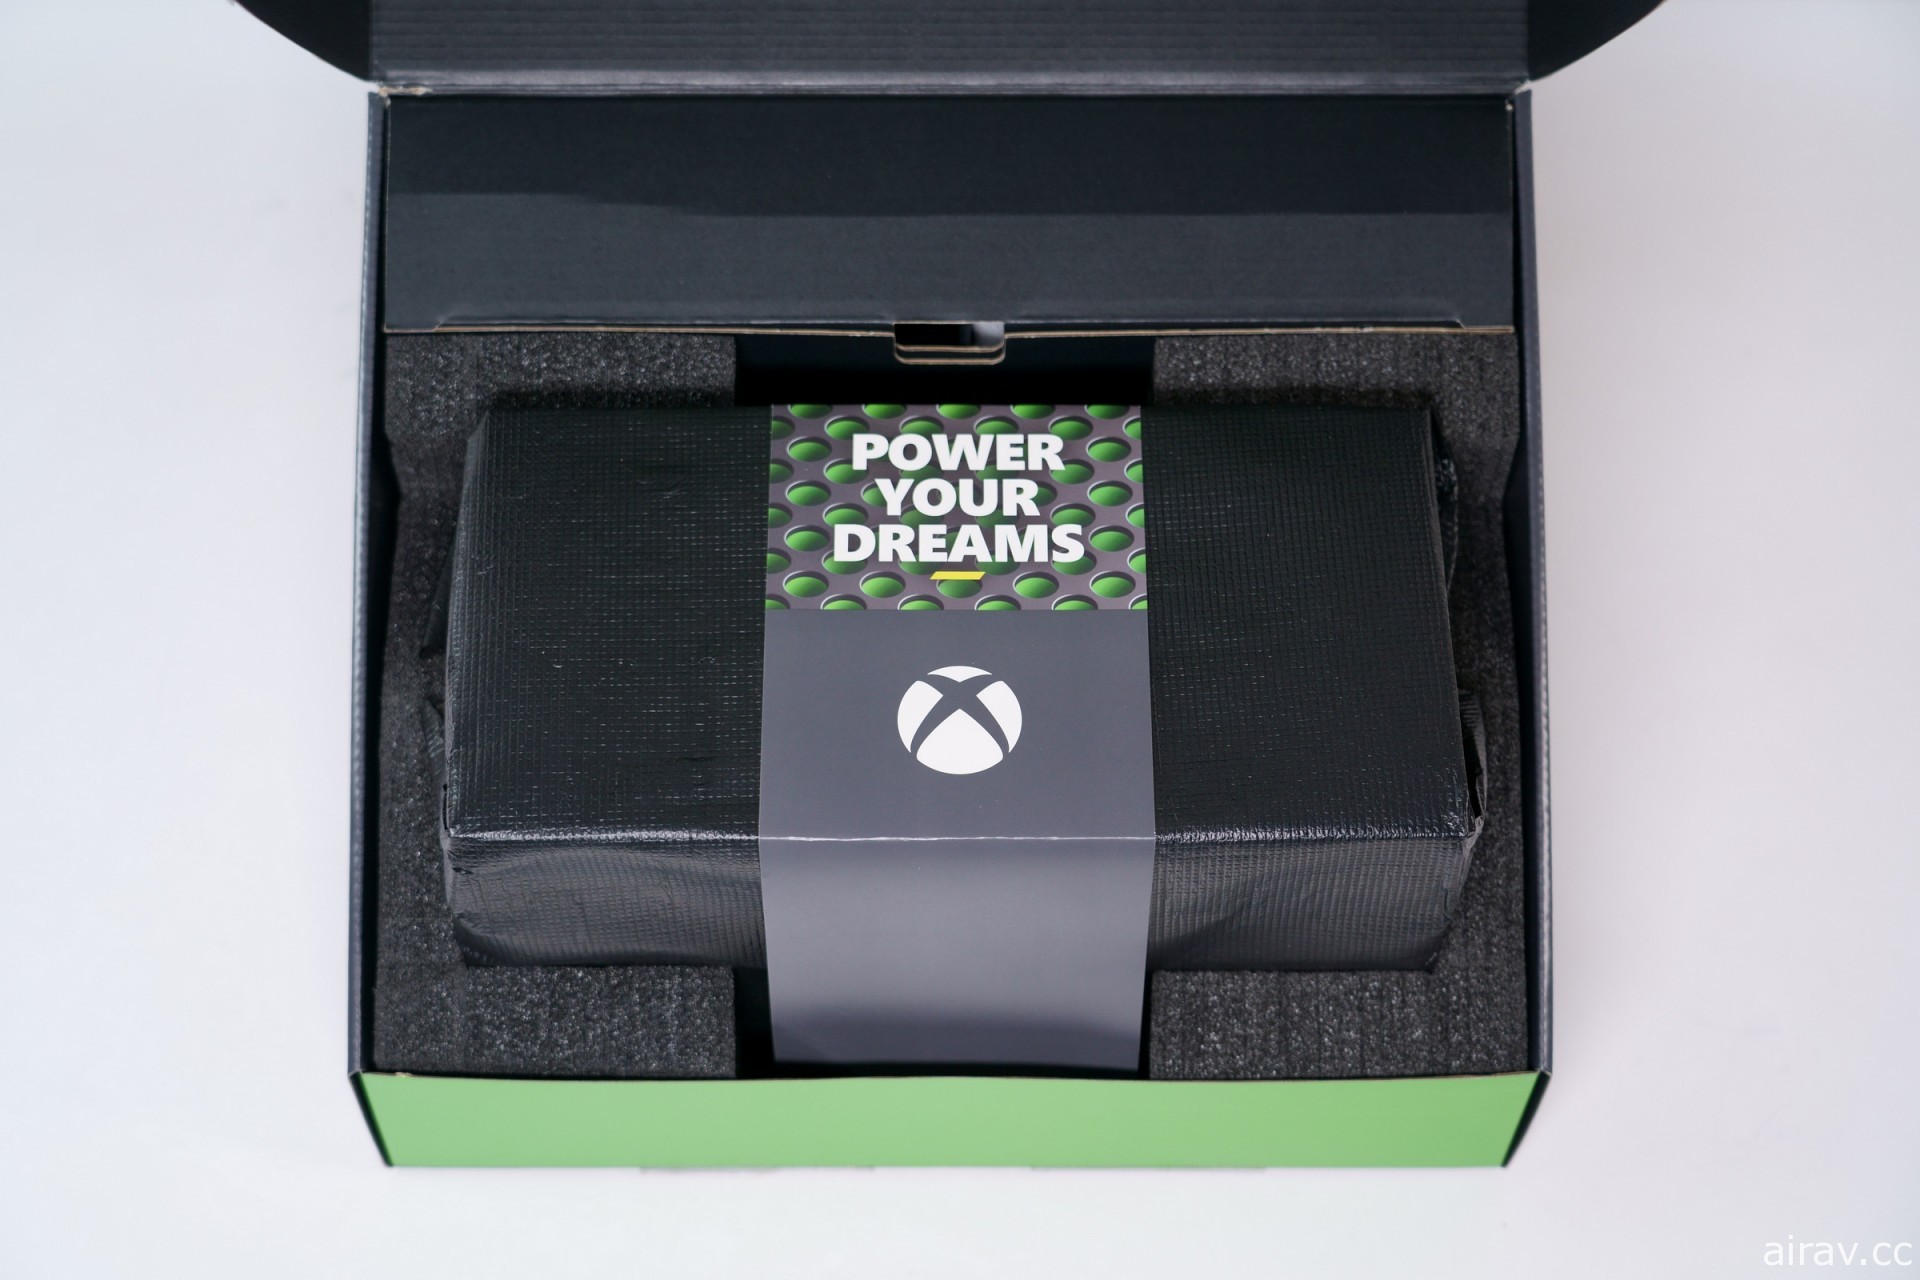 POWER YOUR DREAMS！ Xbox Series X | S 主機巴哈姆特一手開箱報導